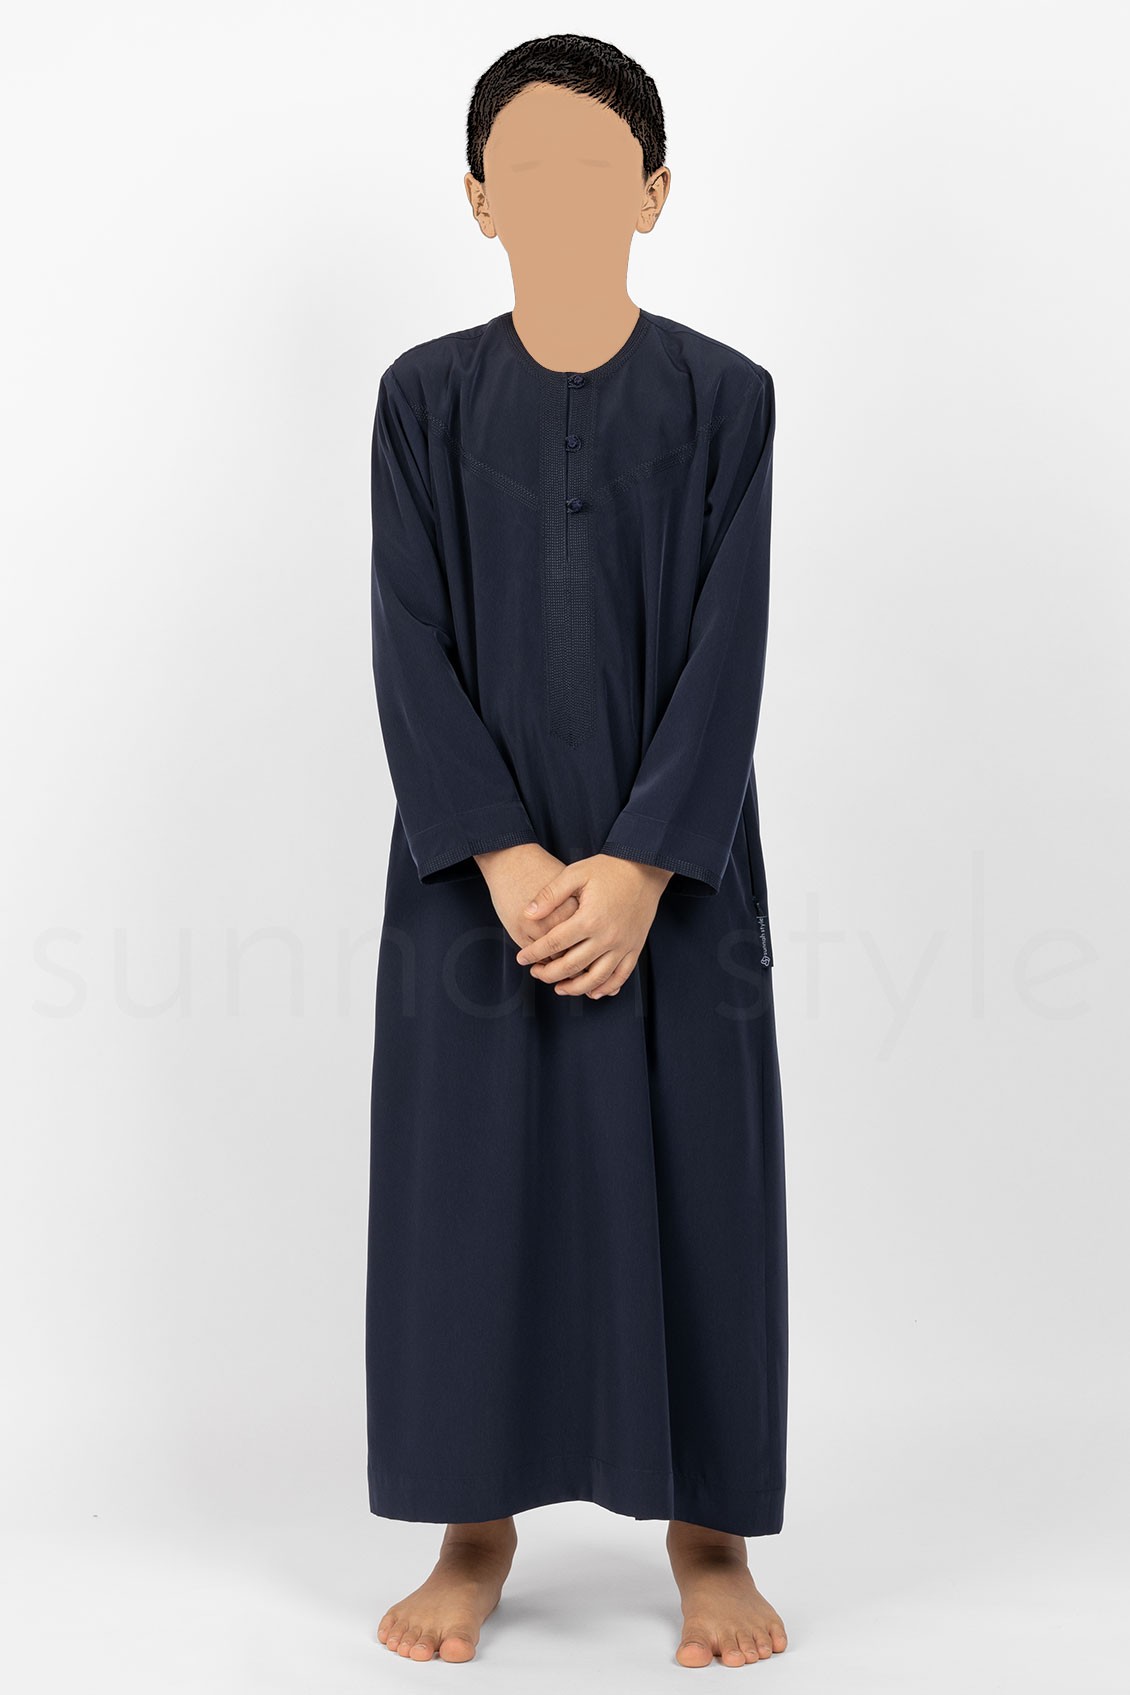 Sunnah Style Boys Omani Embroidered Thobe Navy Blue Child